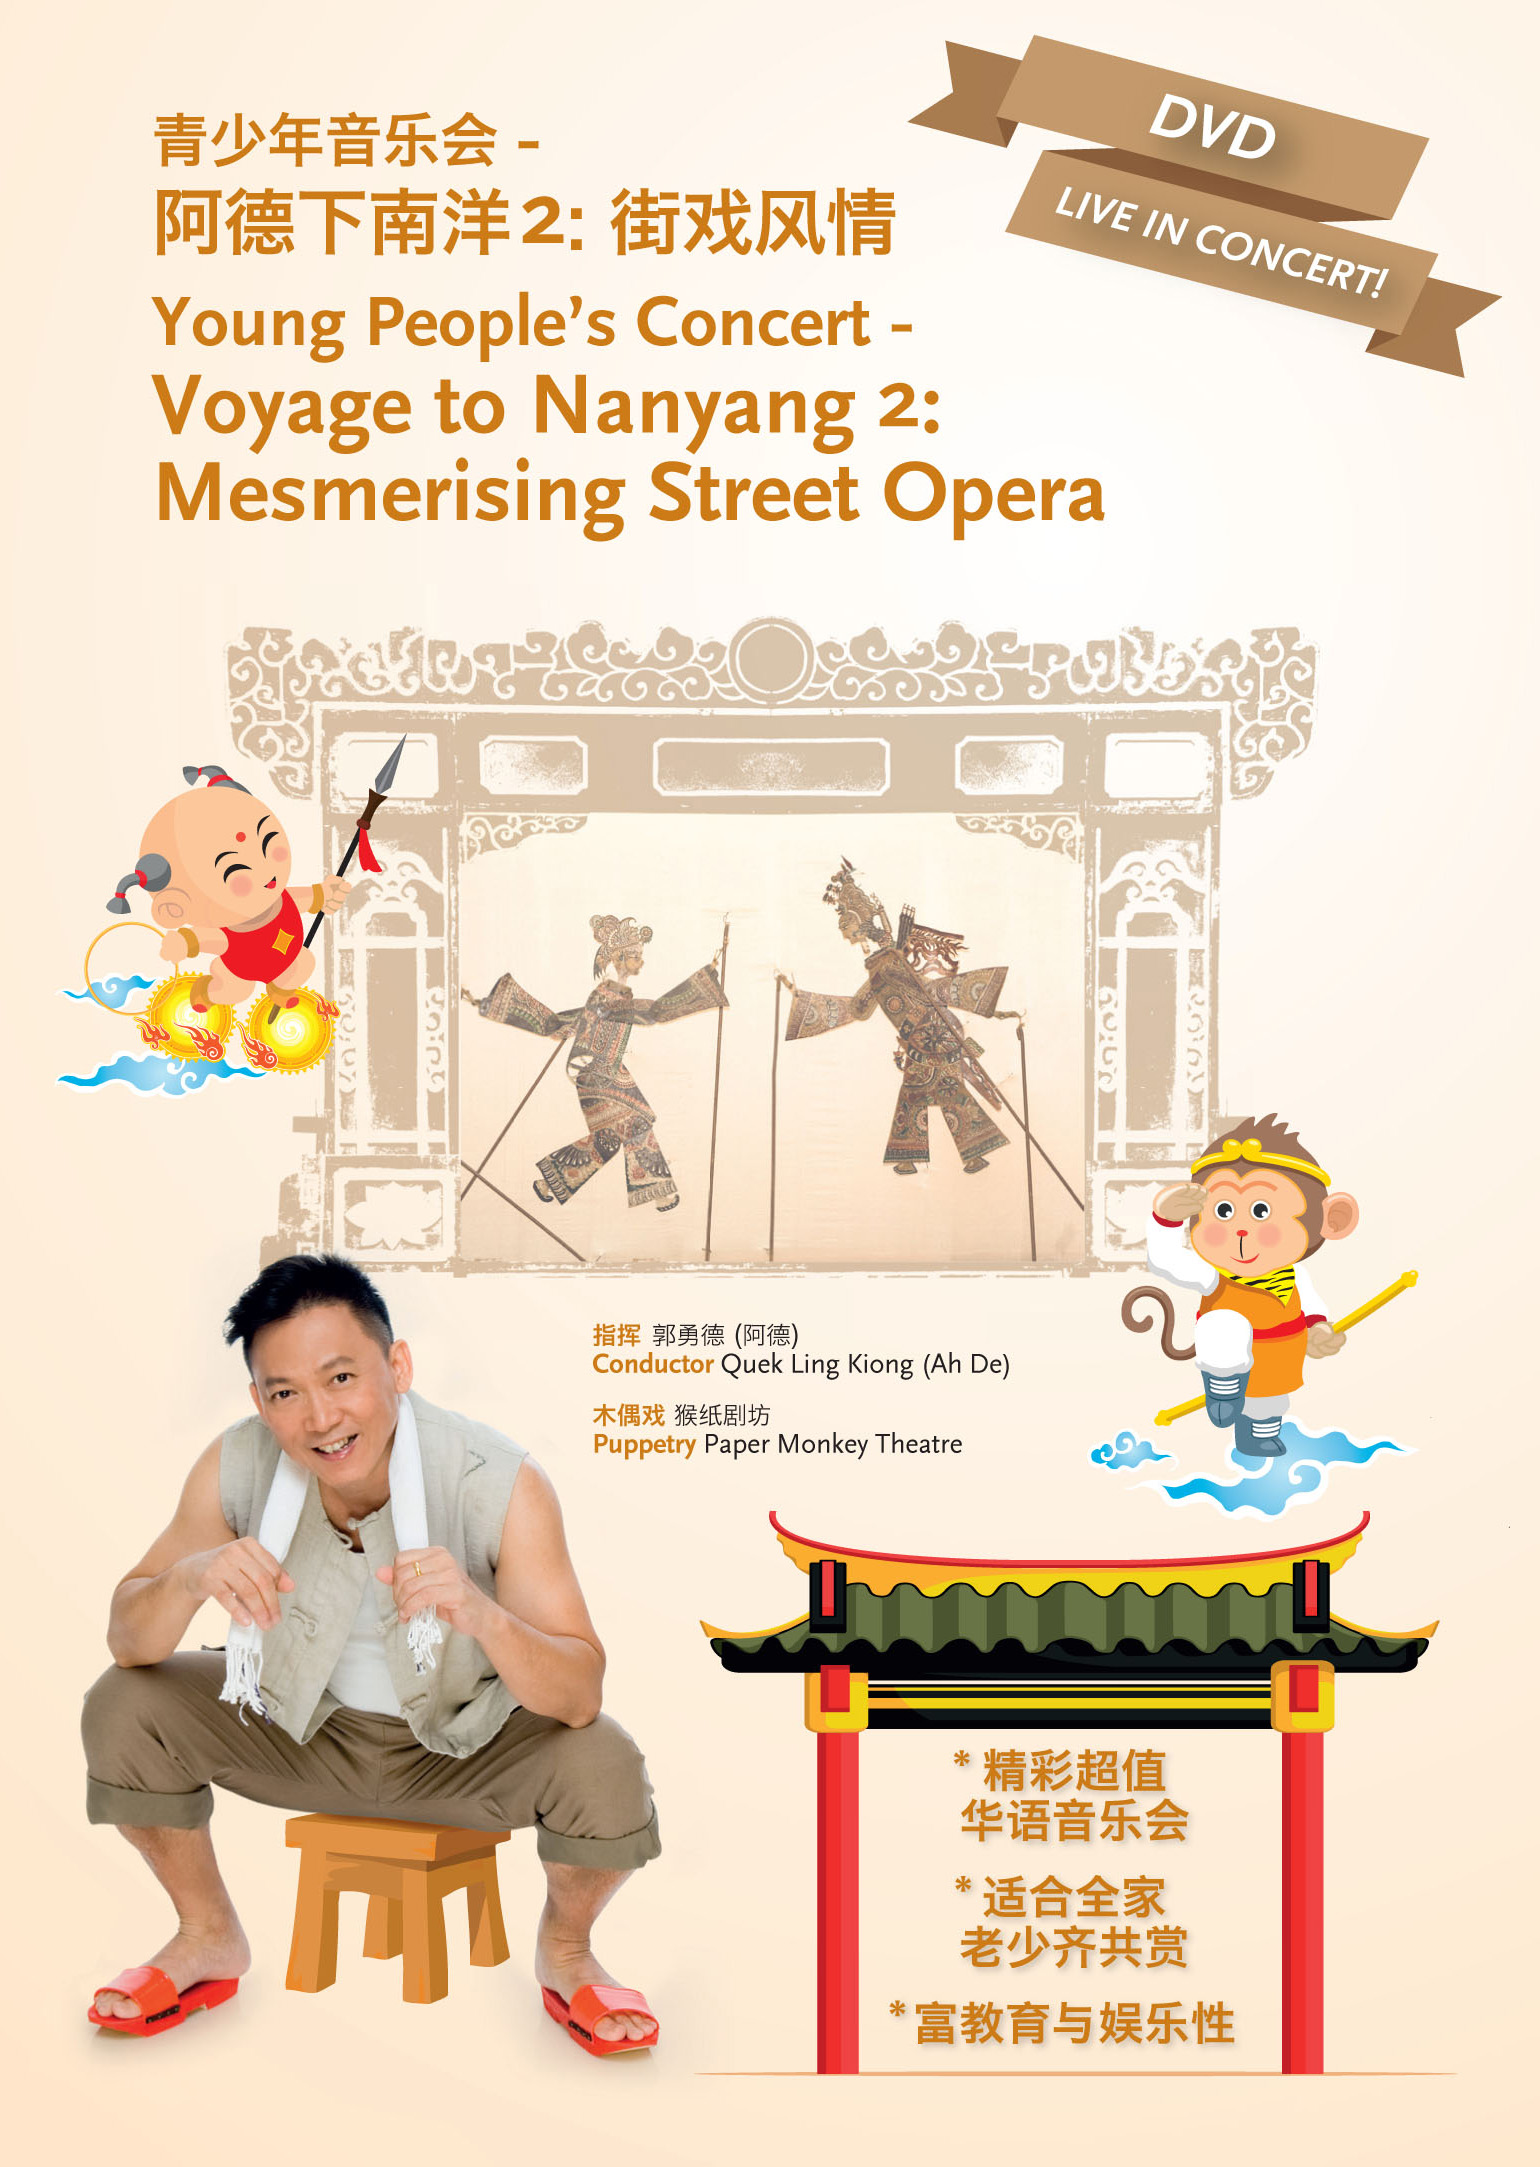 Voyage-to-Nanyang-2-DVD 光碟与周边商品